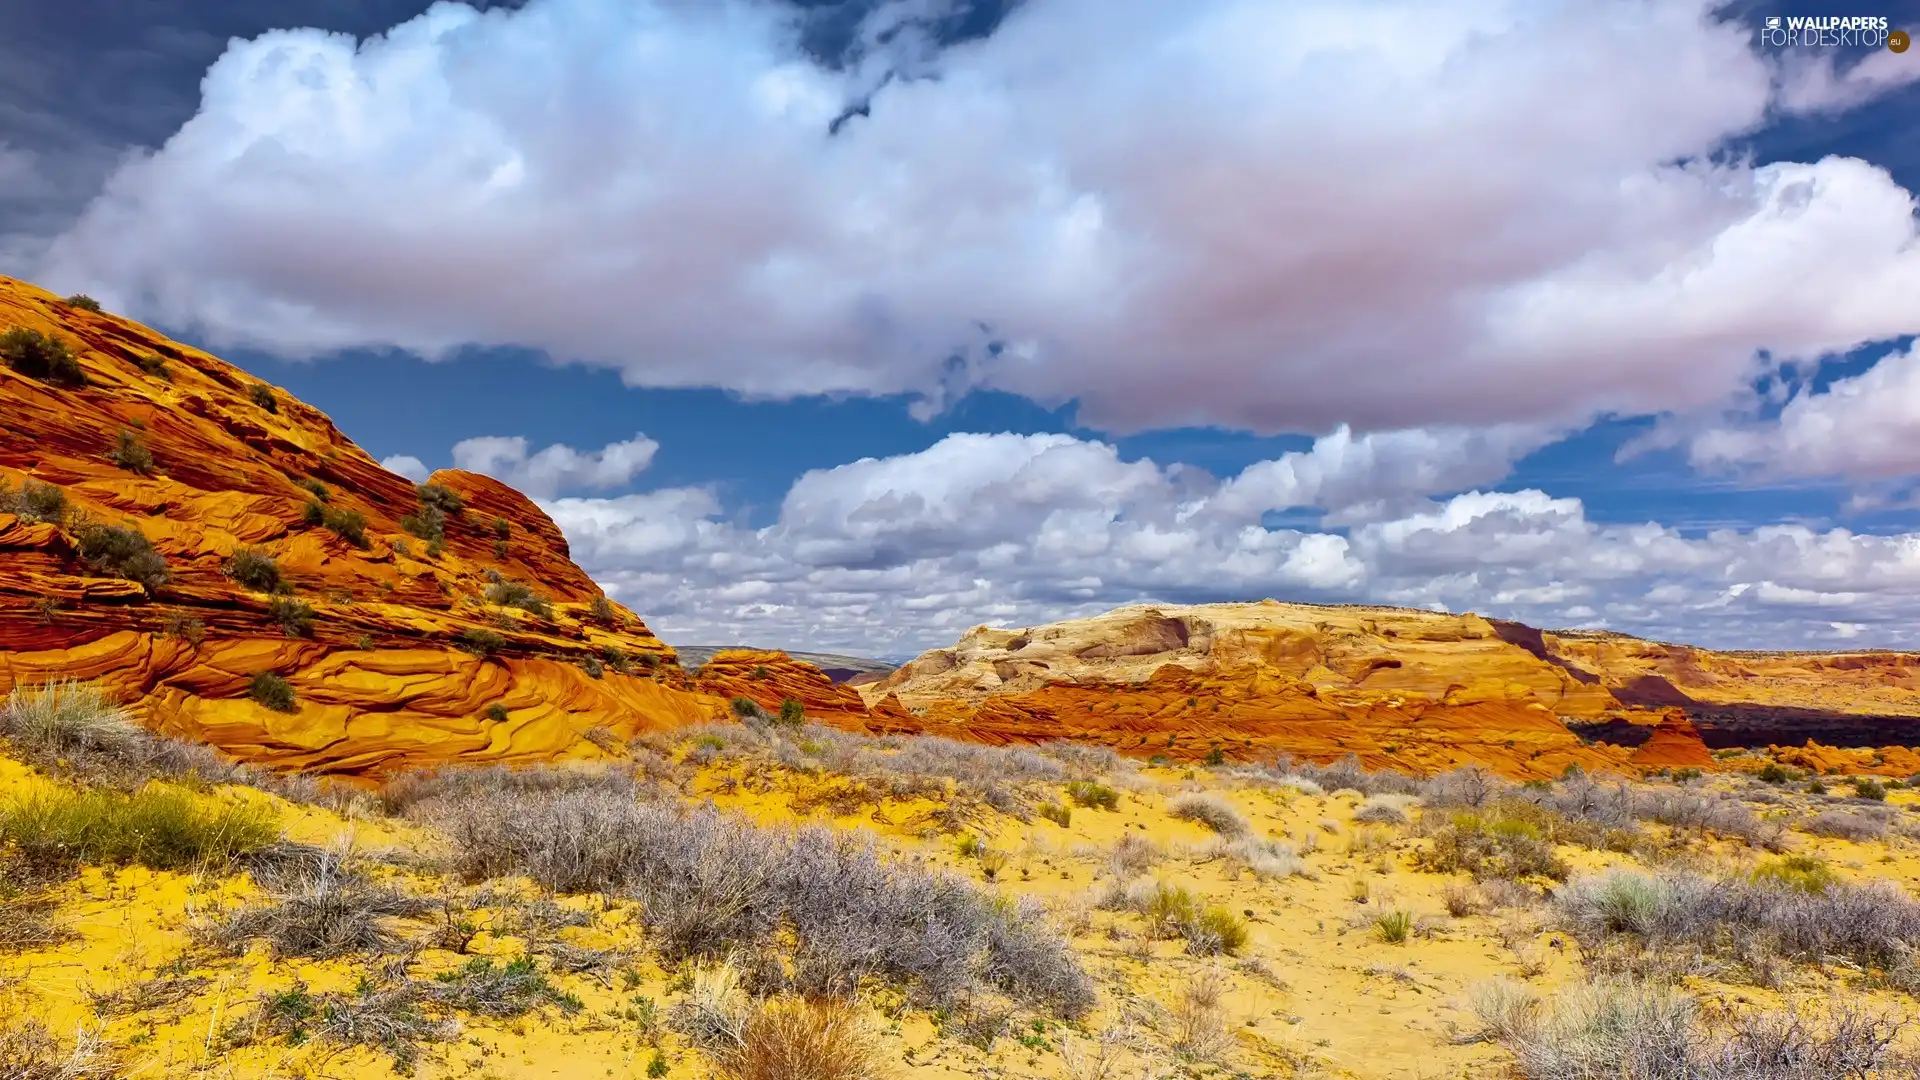 united, Arizona, White, clouds, canyon, state